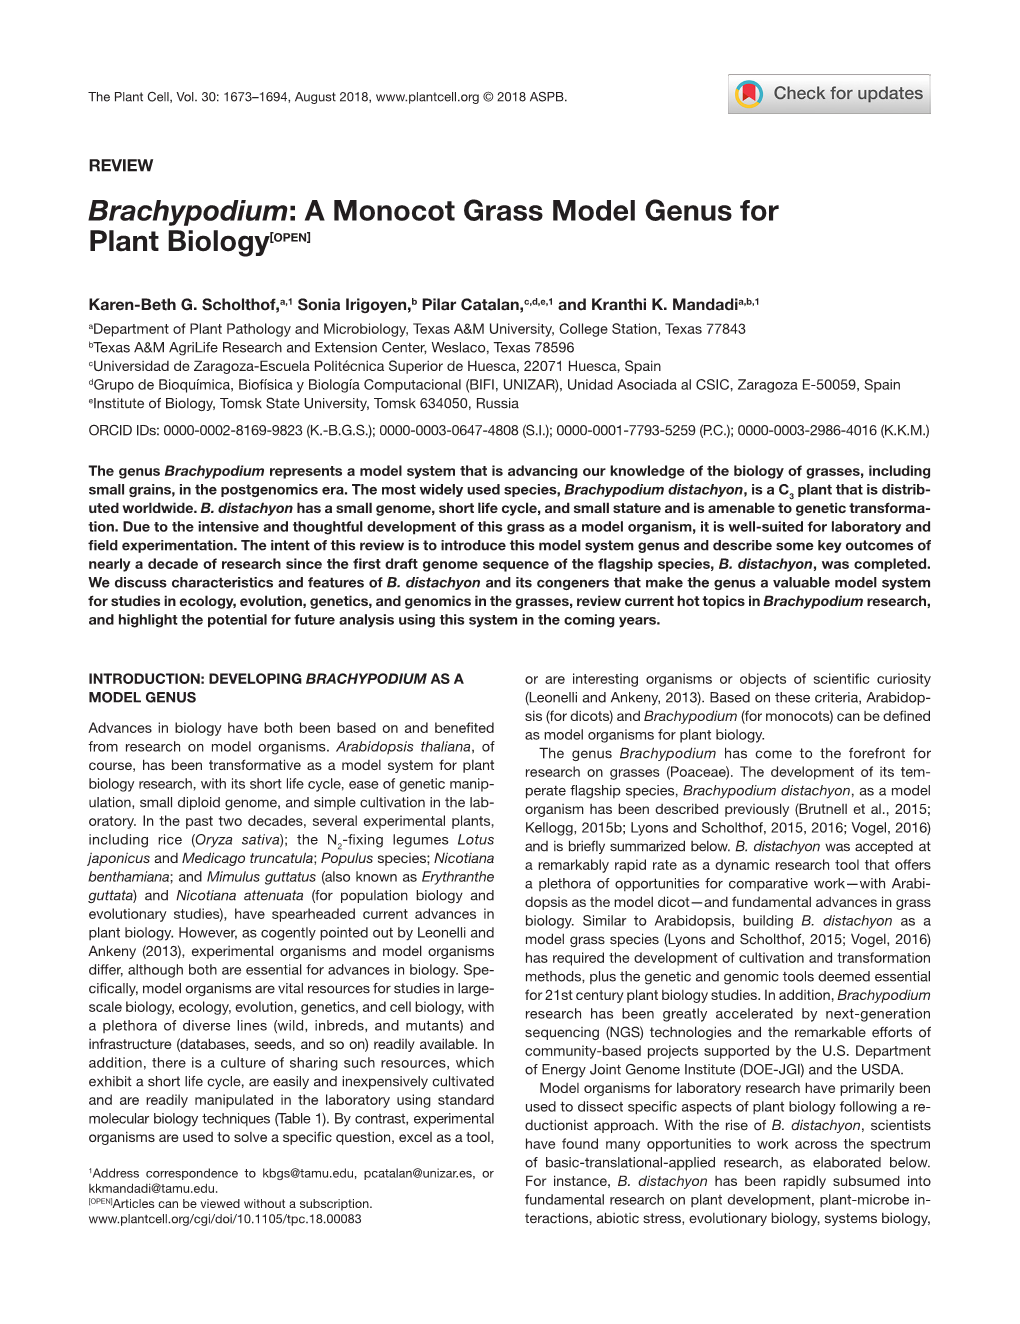 Brachypodium: a Monocot Grass Model Genus for Plant Biology[OPEN]